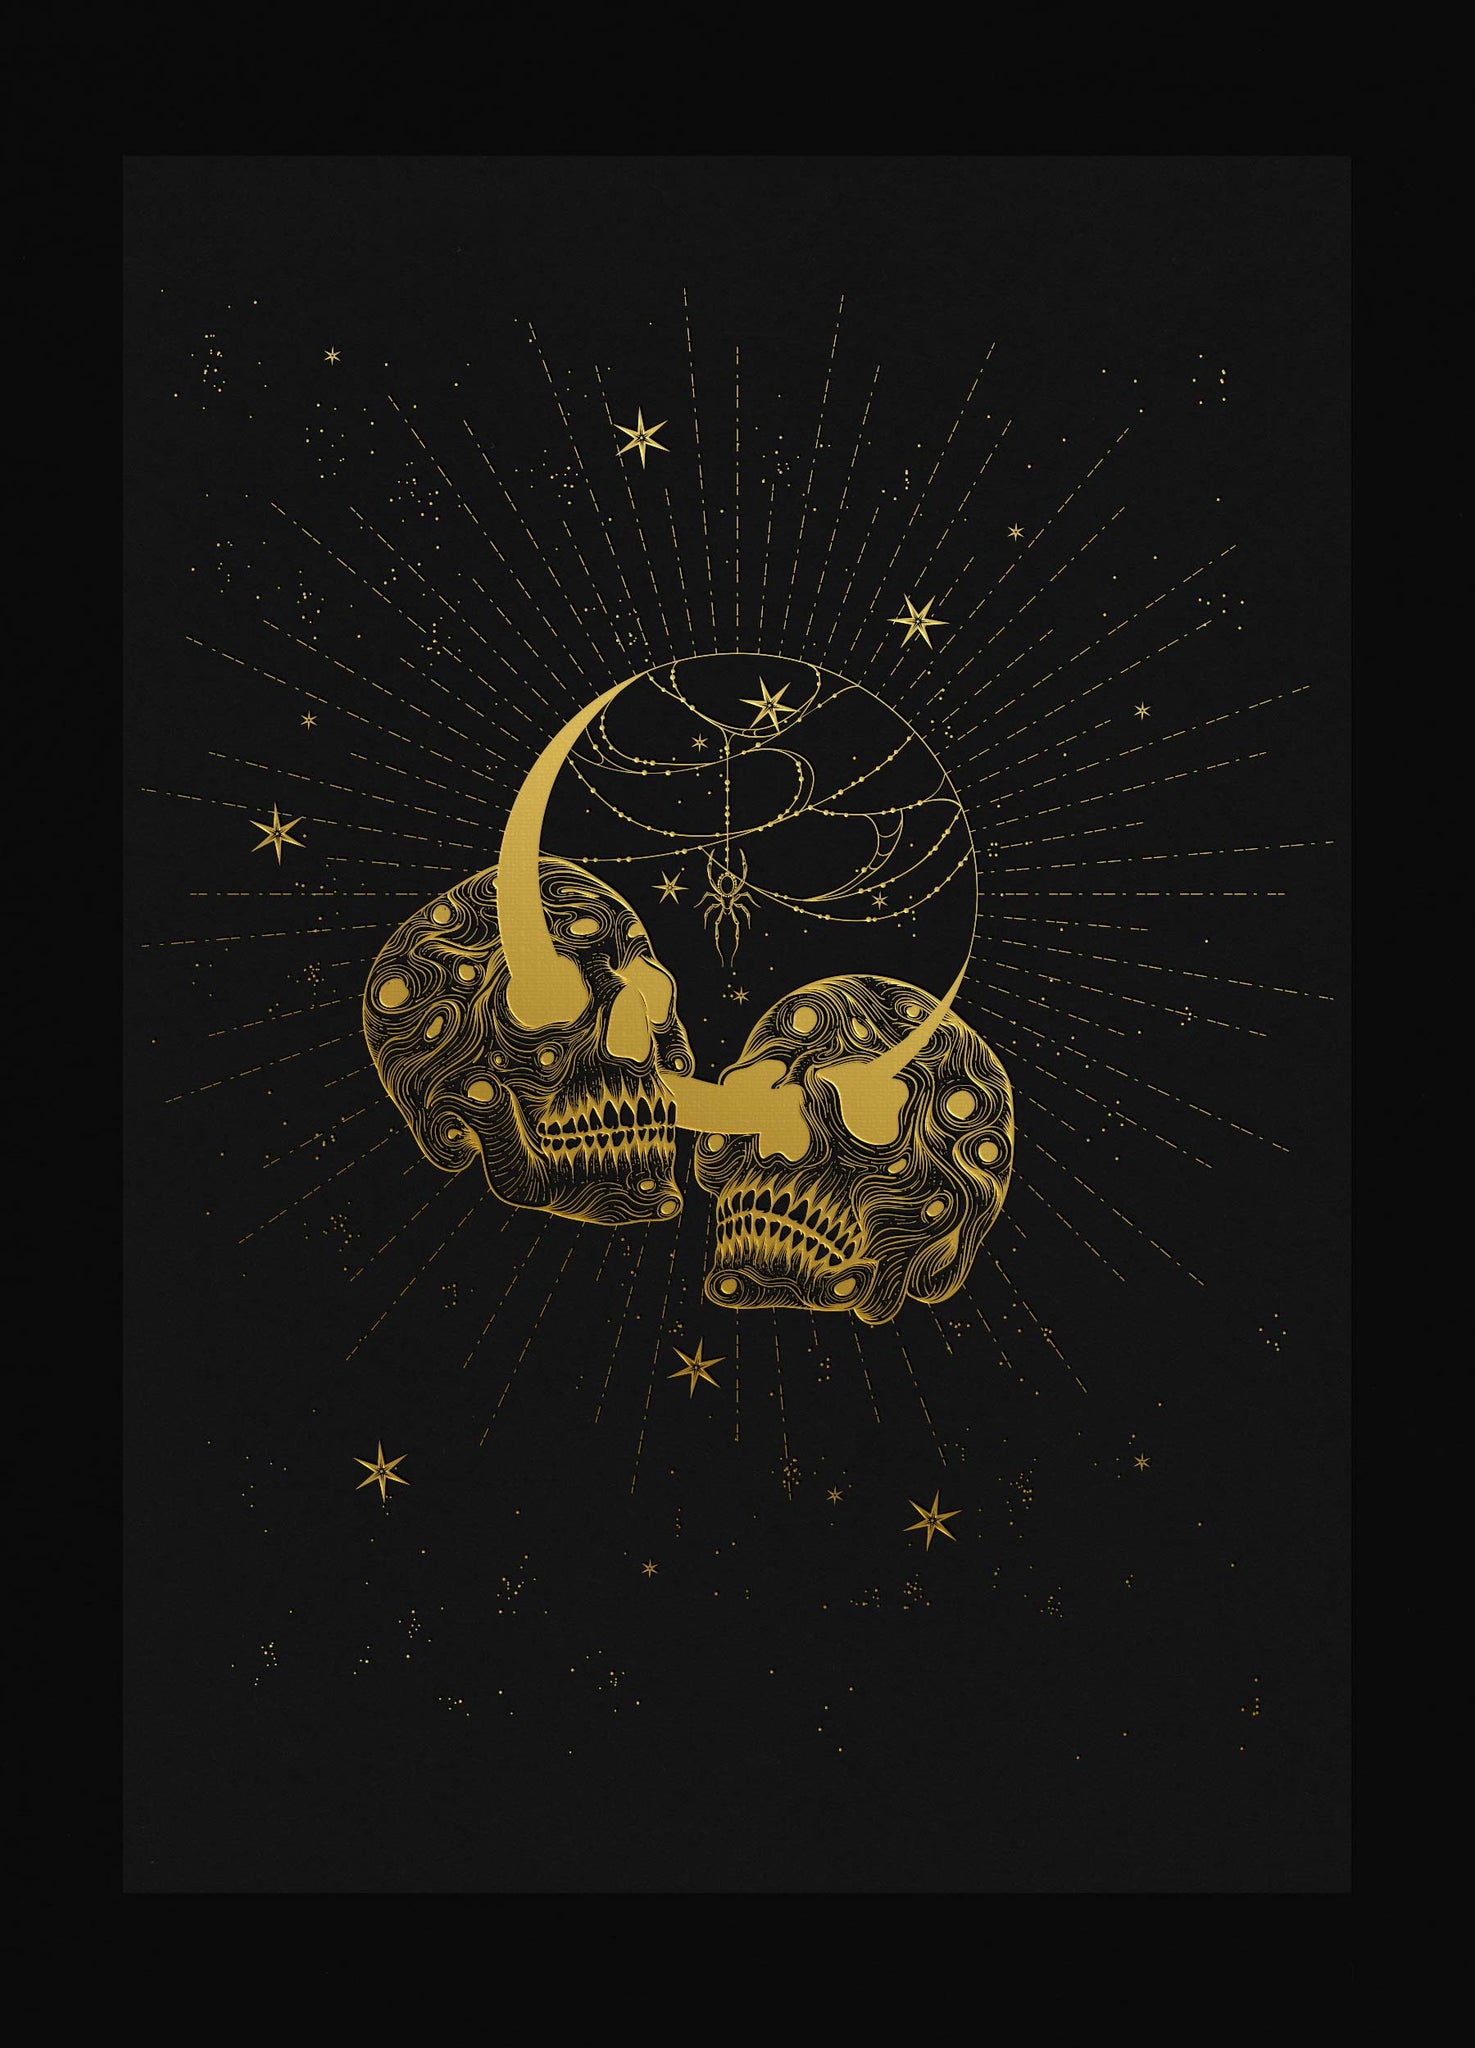 Till Death gold foil art print on black paper by Cocorrina & Co Design Studio and Shop